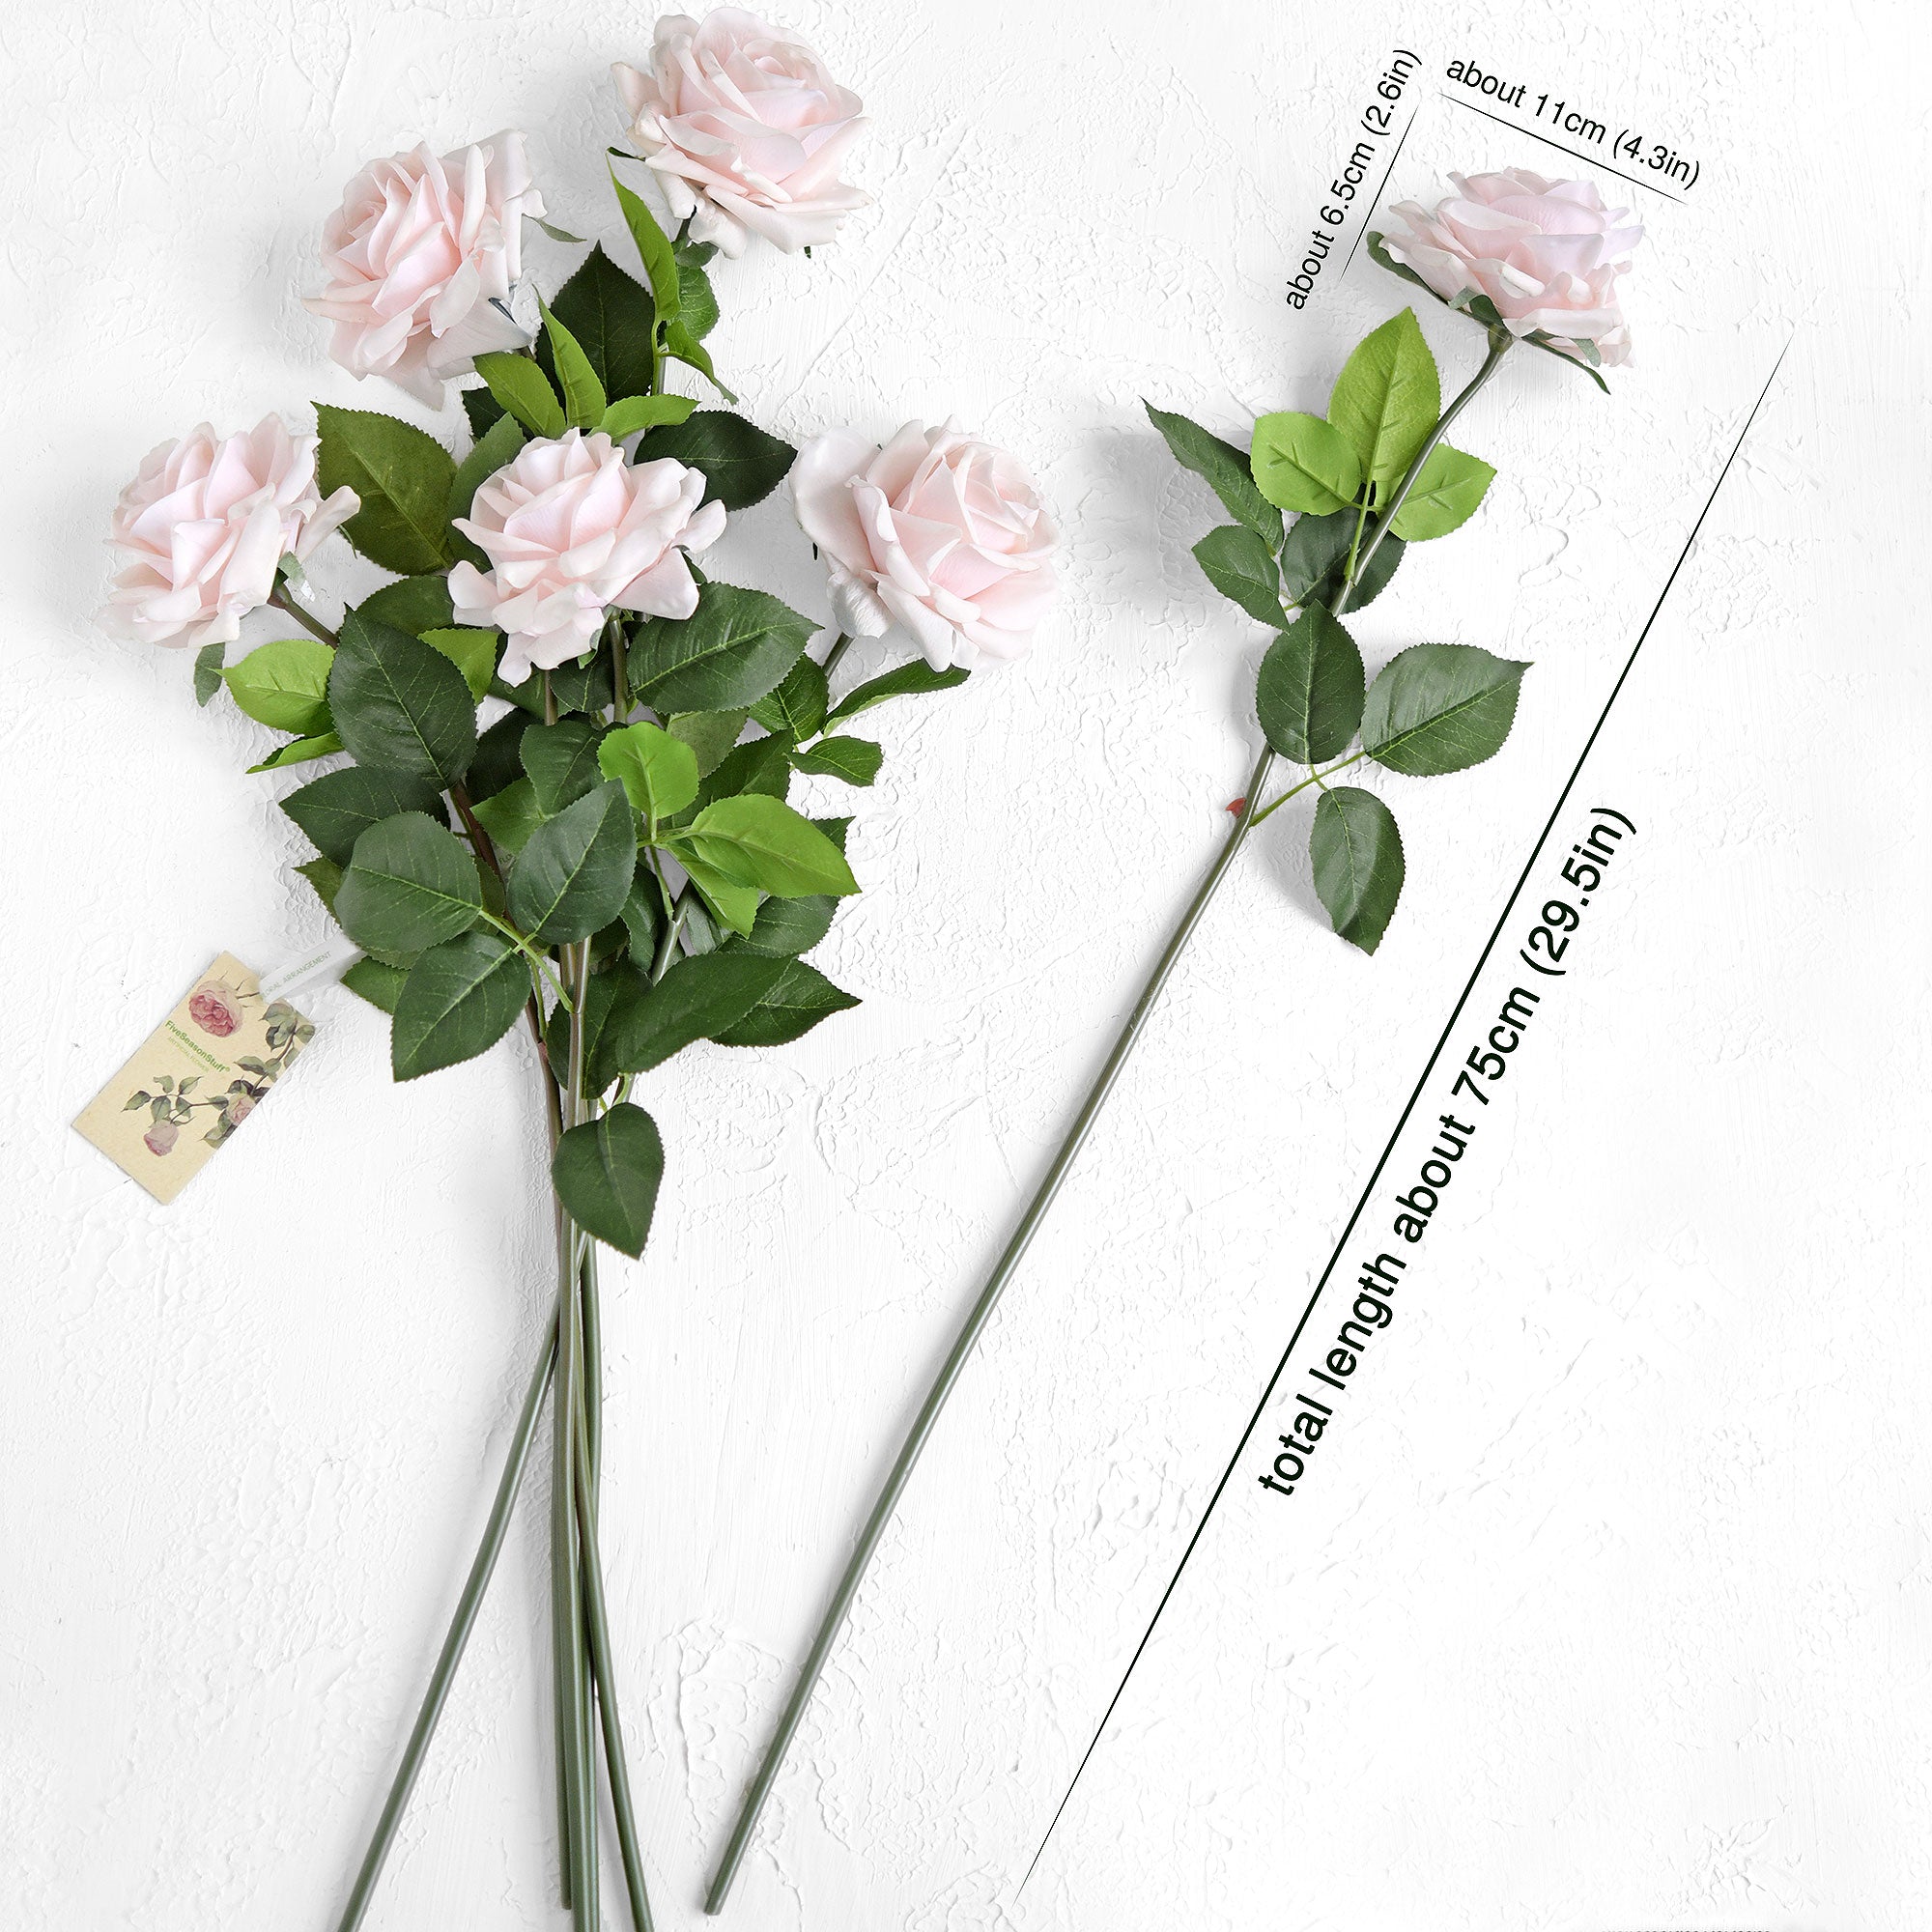 6-foot-tall roses make lasting impression